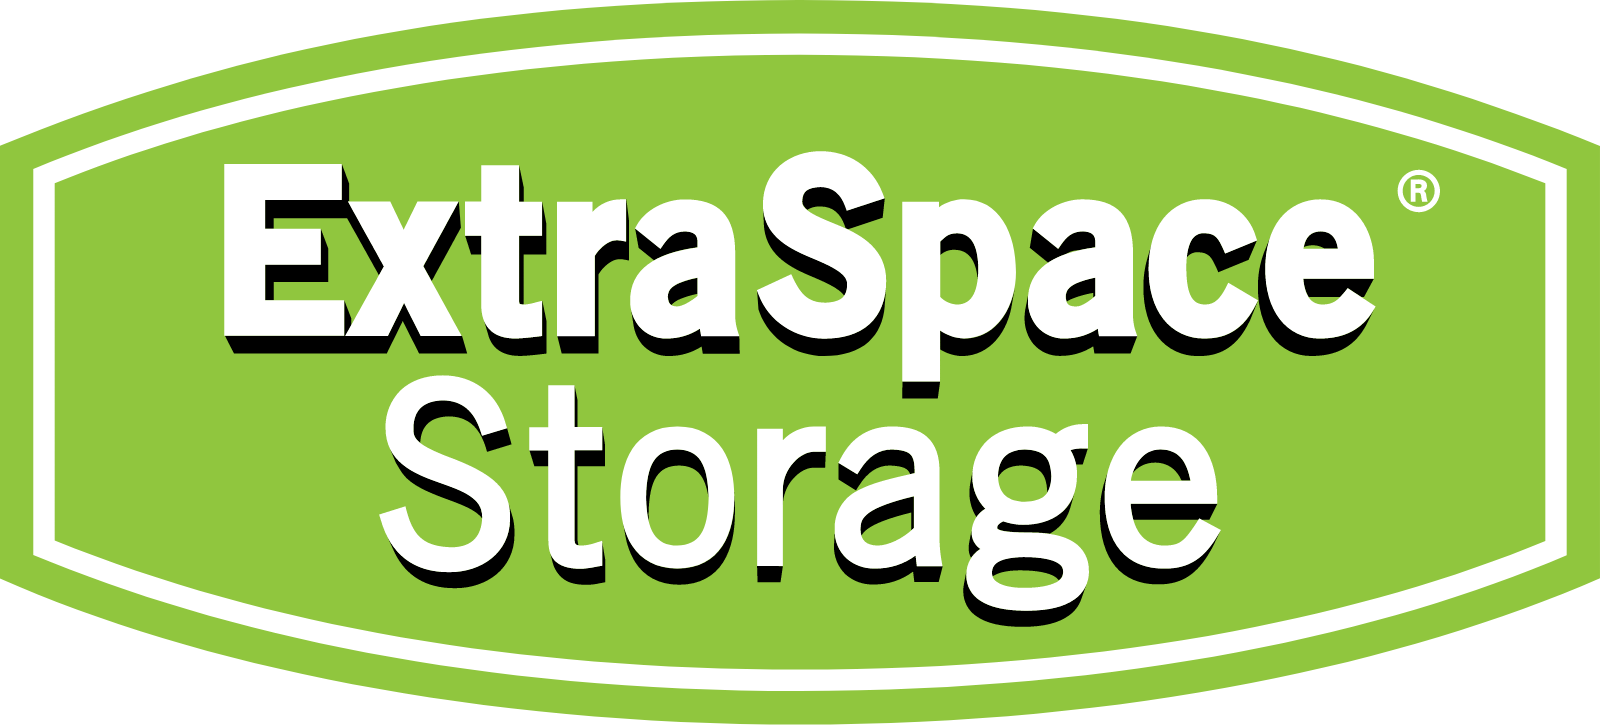 Extra Space Storage
 logo (PNG transparent)